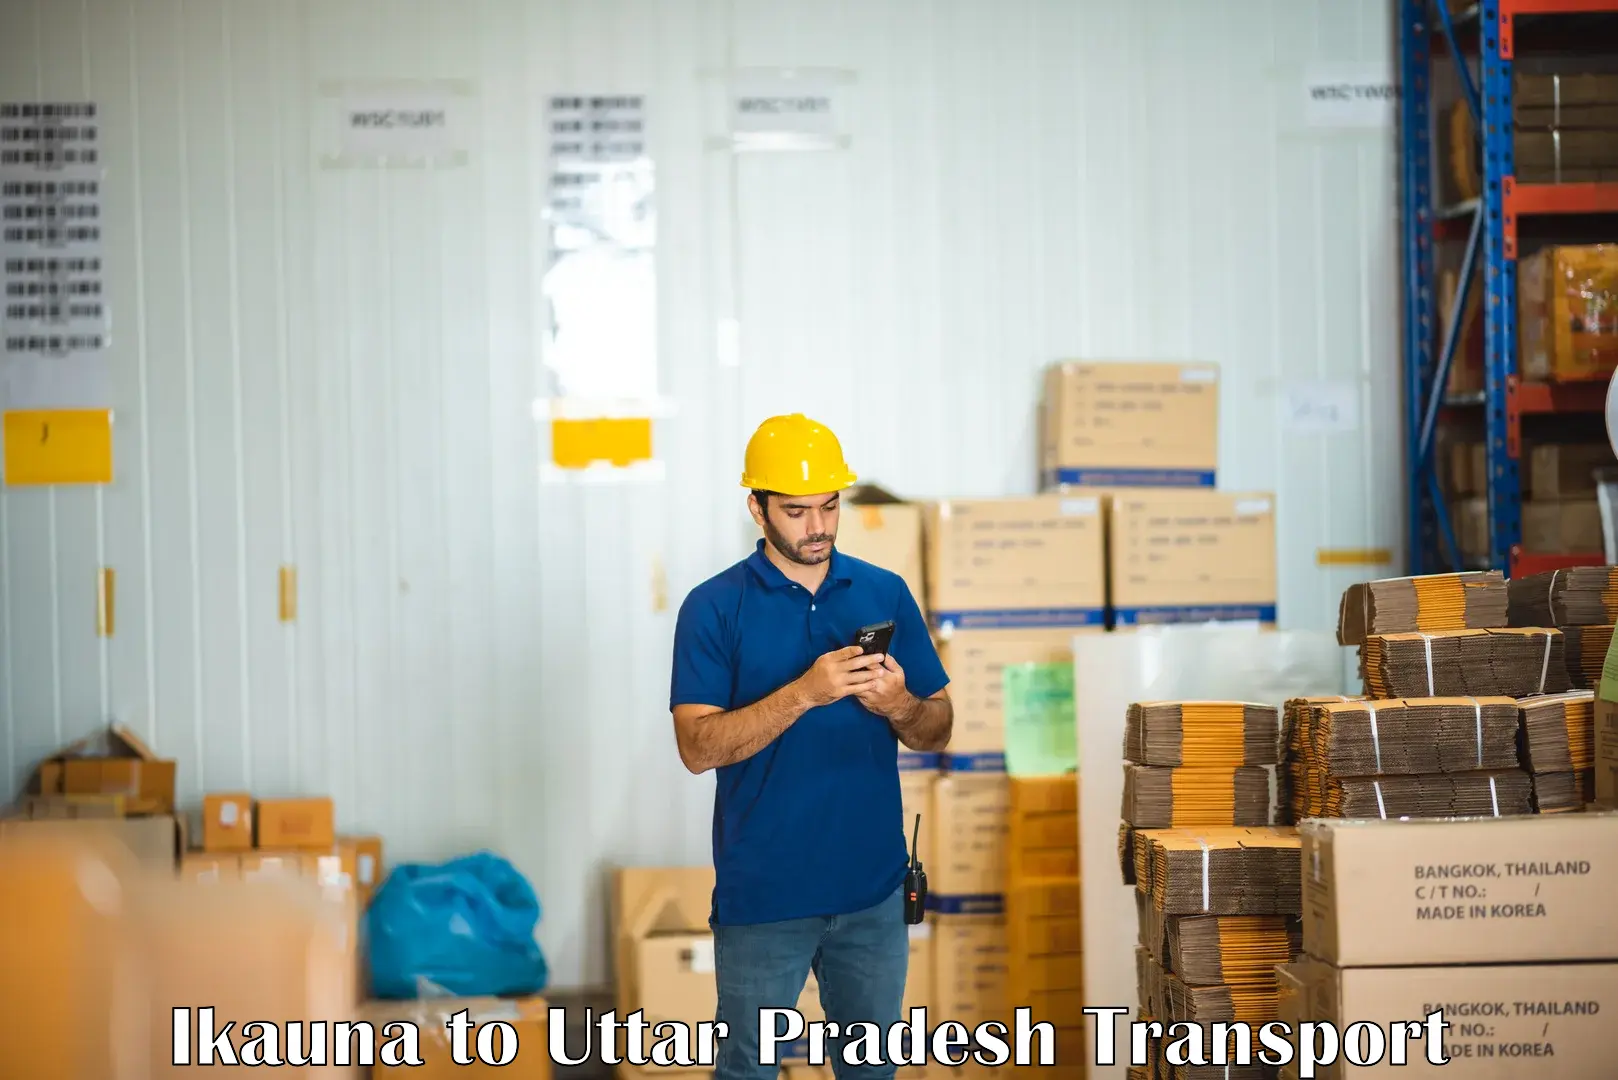 Shipping partner Ikauna to Dhaurahara